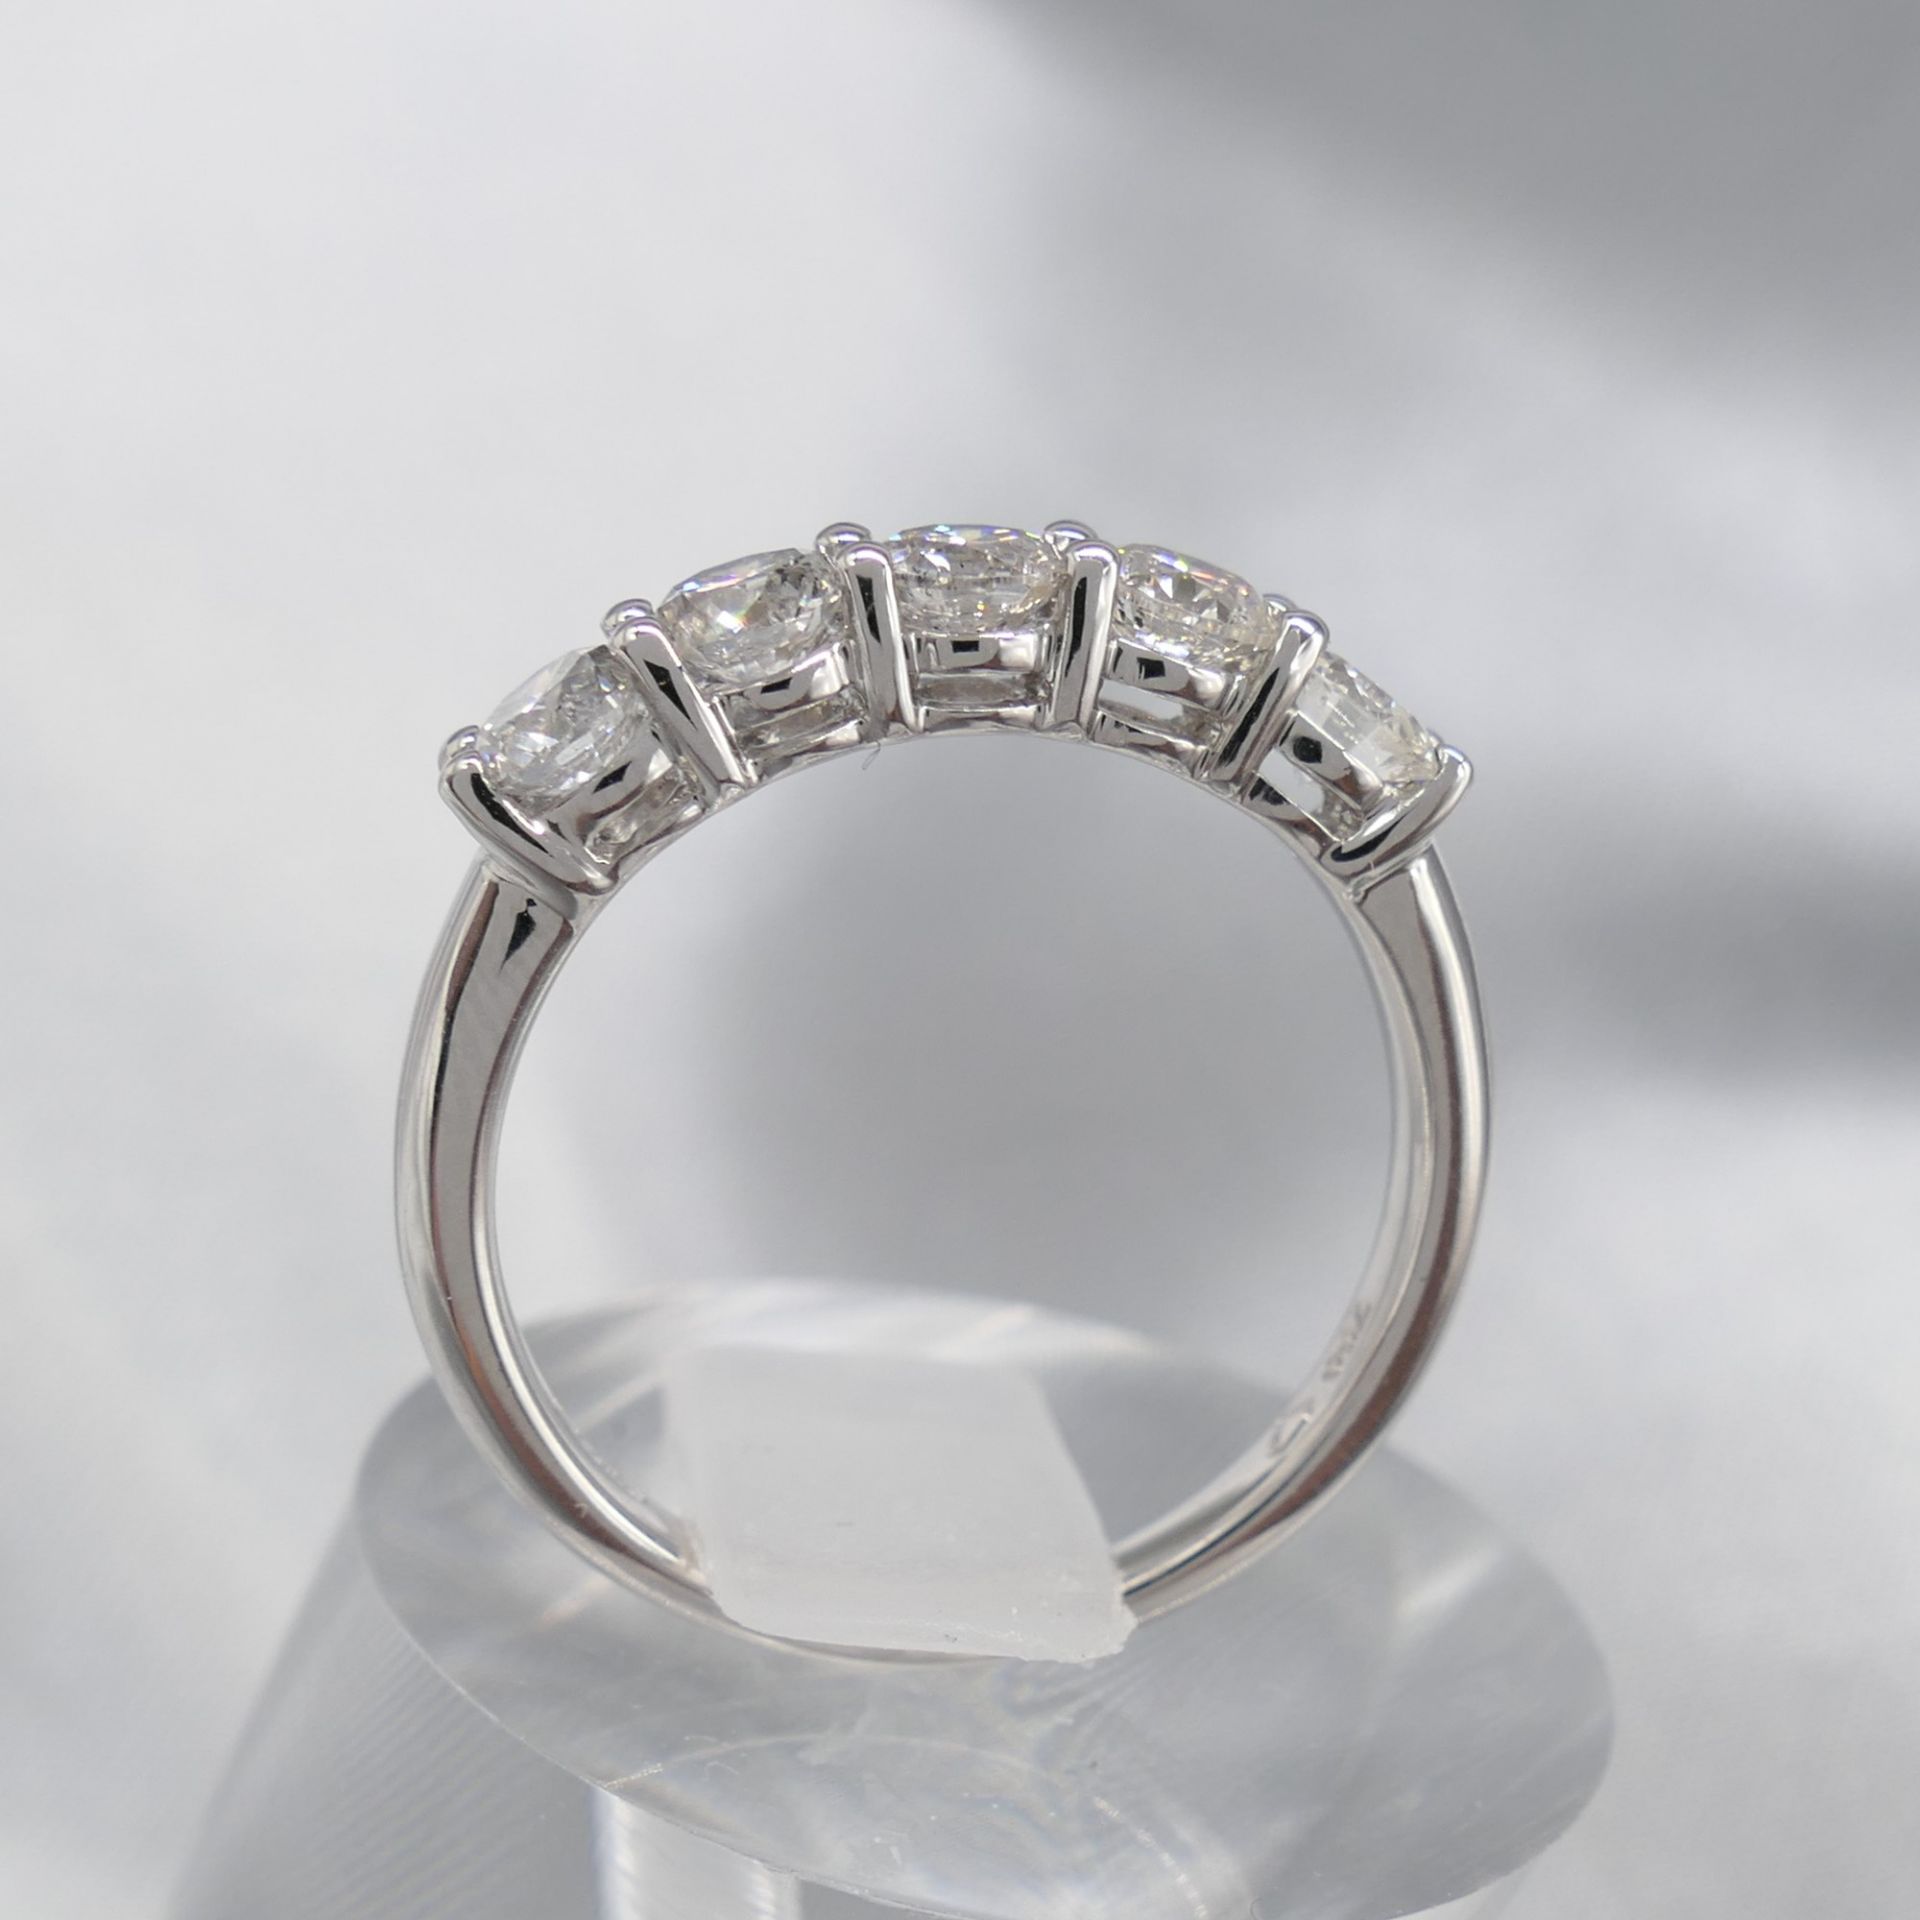 18K White Gold 1.09 Carat Round Brilliant-Cut Diamond 5-Stone Ring - Image 4 of 6